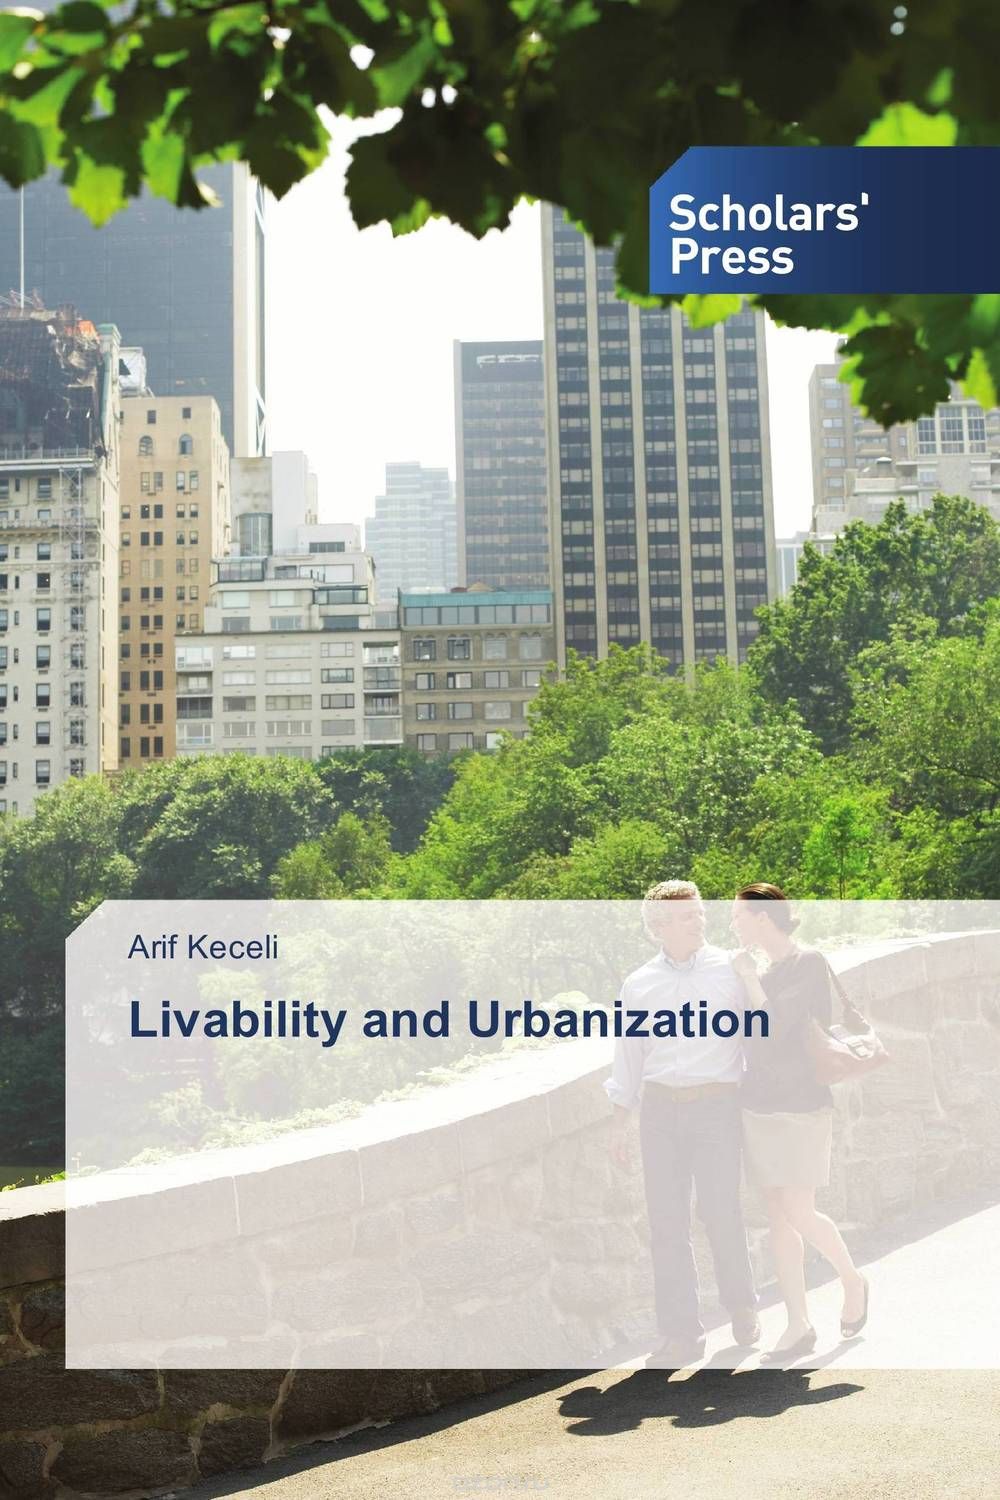 Скачать книгу "Livability and Urbanization"